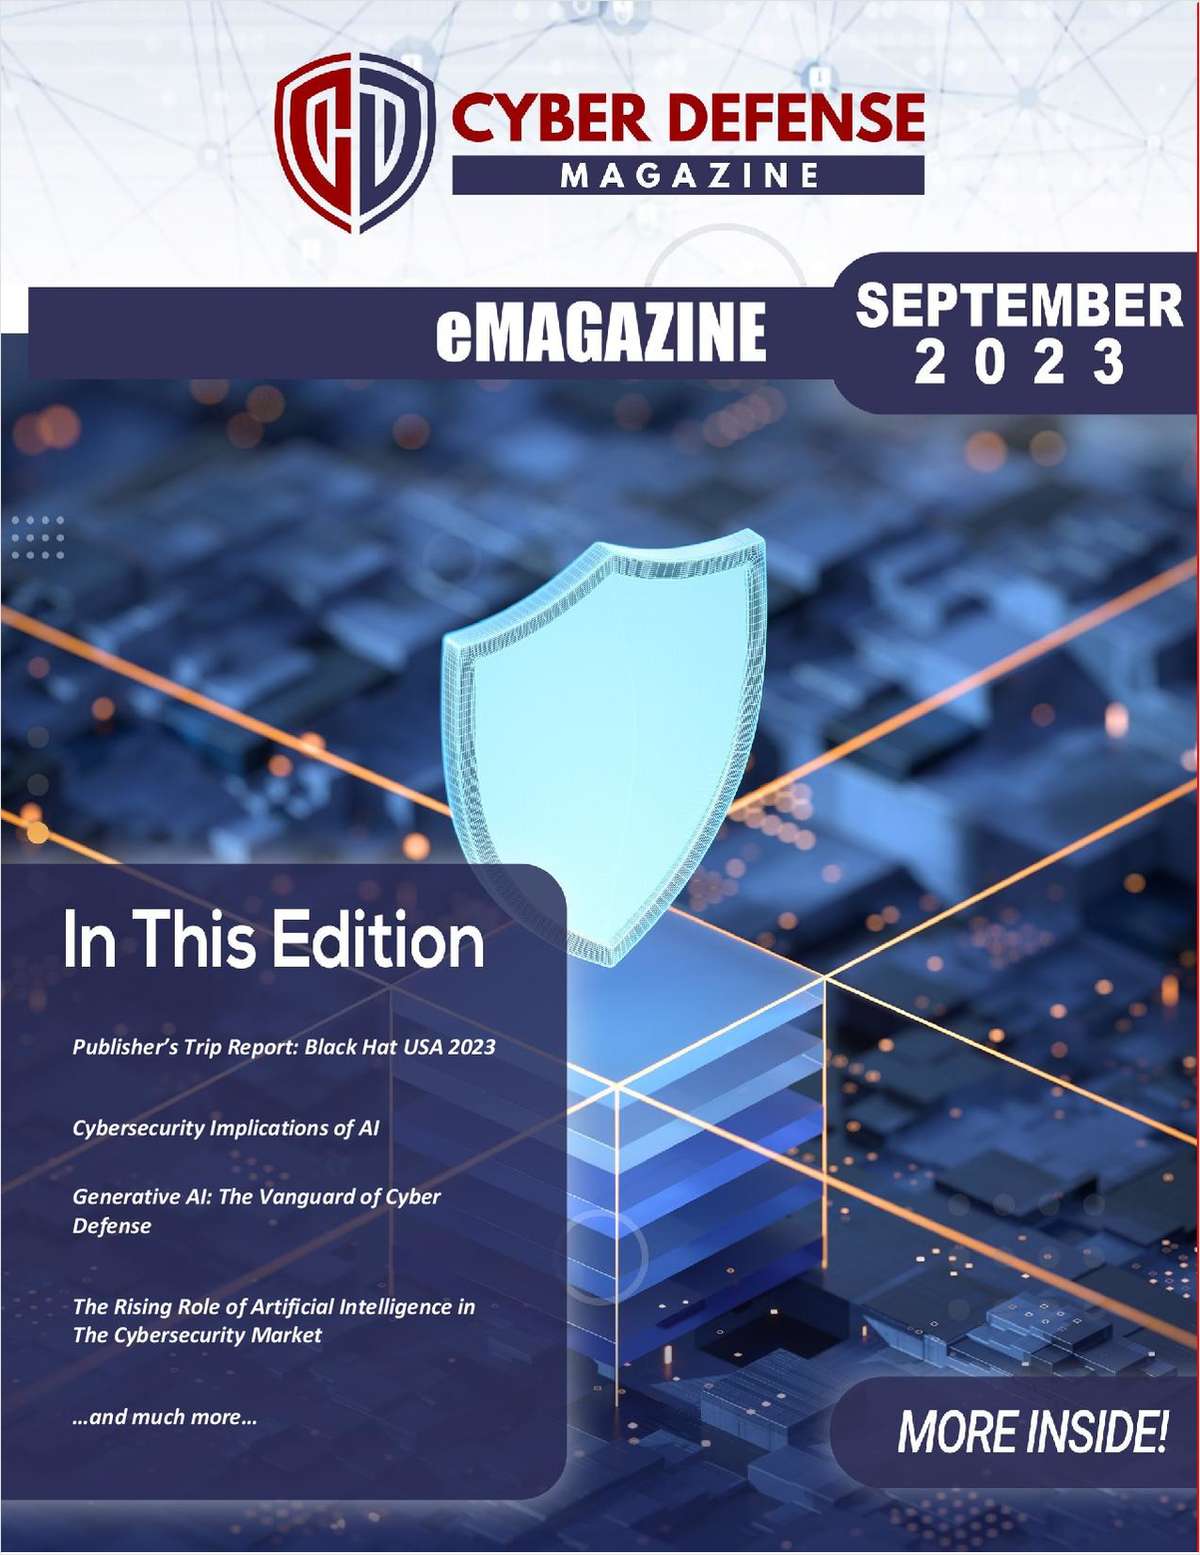 Cyber Defense Magazine September Edition for 2023